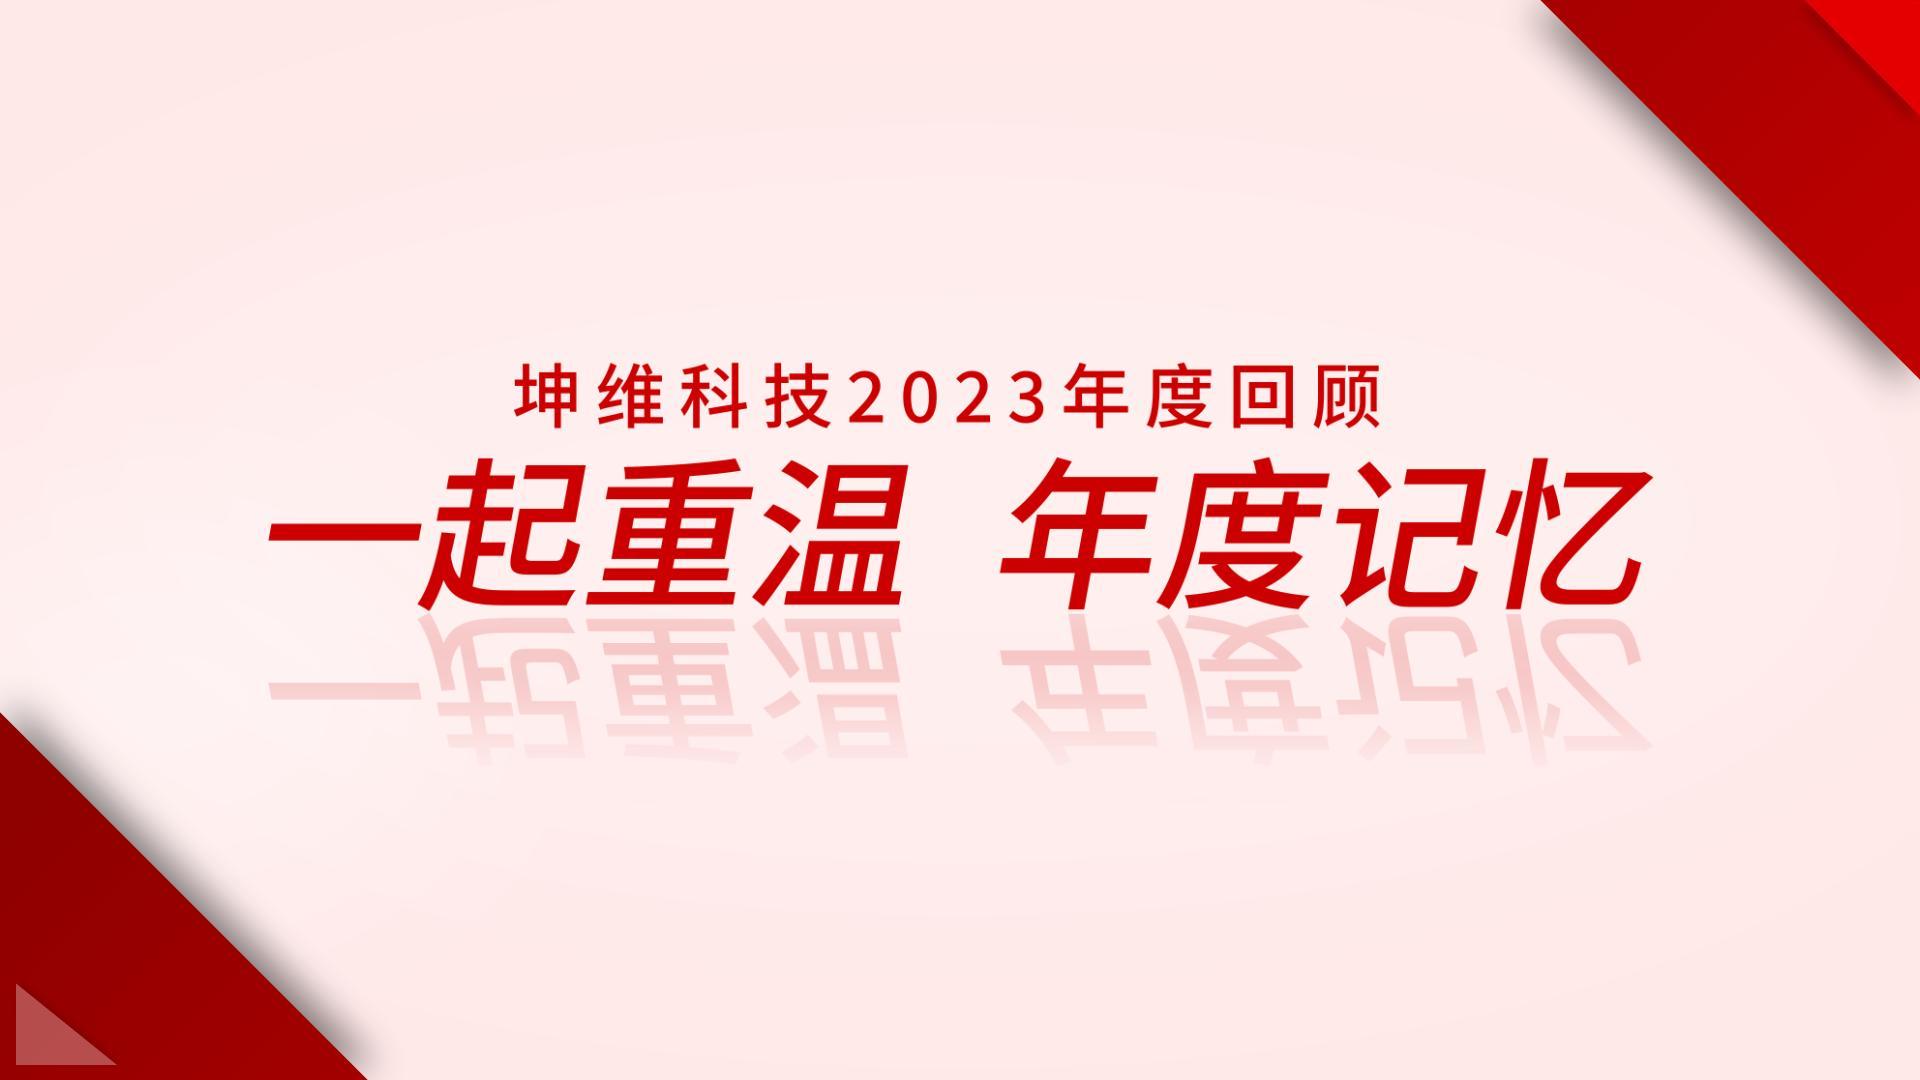 304am永利集团(中国)有限公司-Official Website_image1708